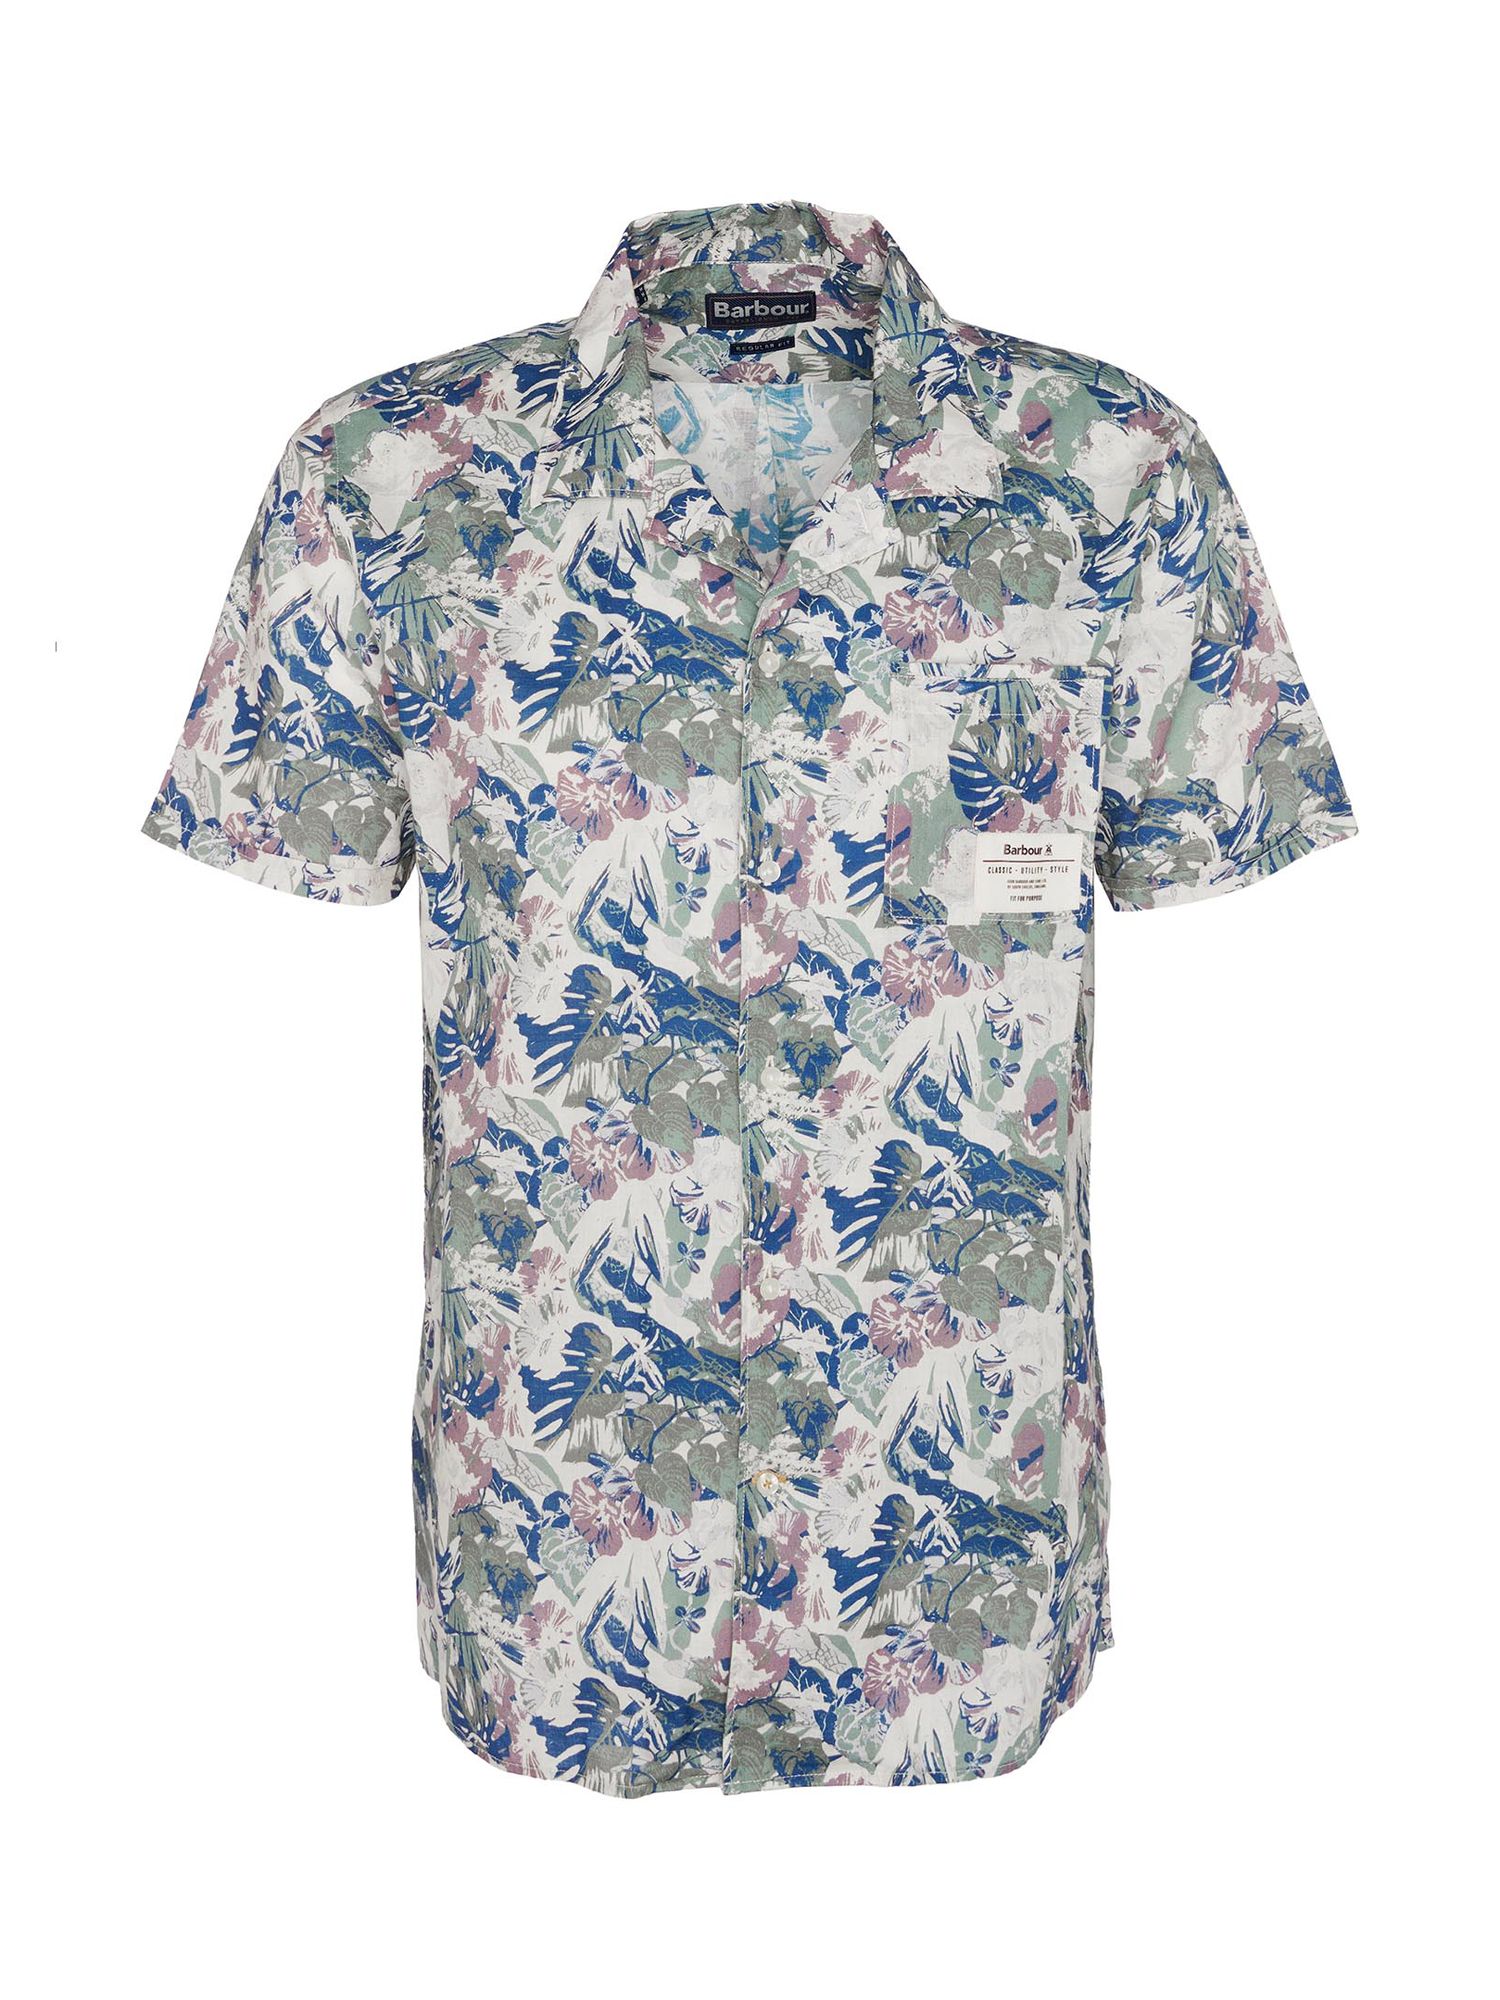 Barbour Hindle Summer Floral Print Shirt, Multi, M